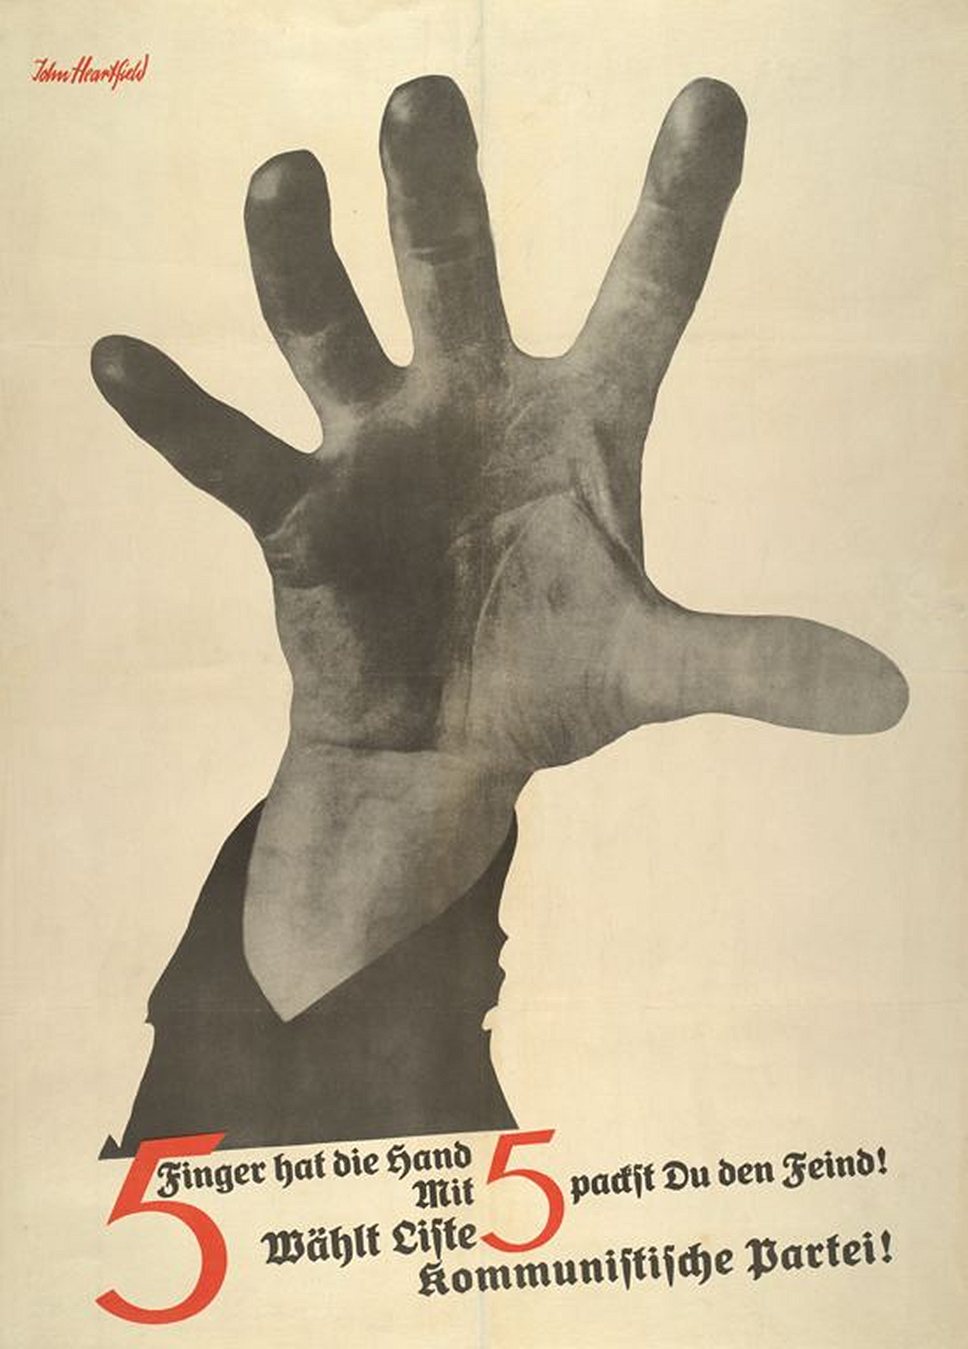 Джон Хартфильд. Плакат «5 пальцев — рука. 5 — ты схватишь врага. Голосуйте за список компартии Германии №5», 1928 год